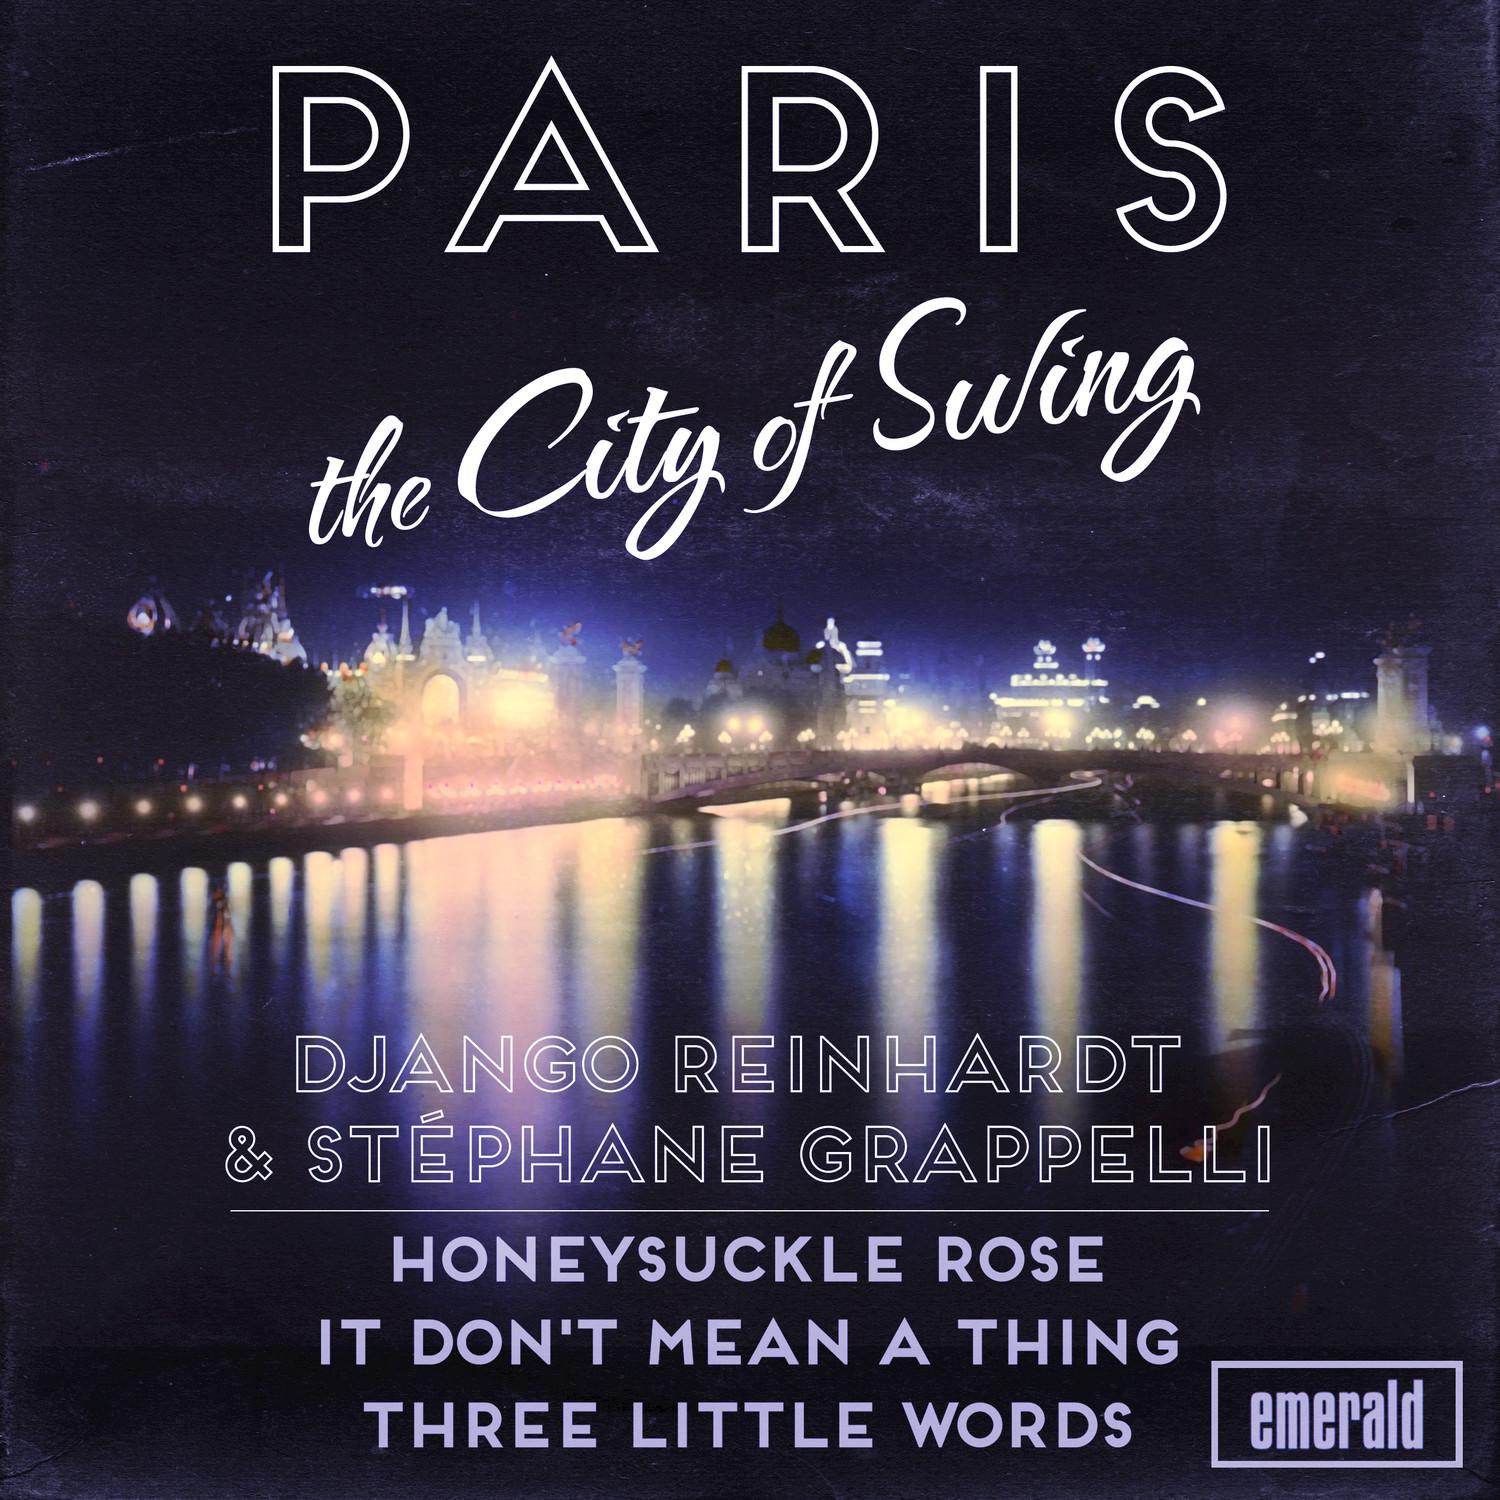 Paris the City of Swing